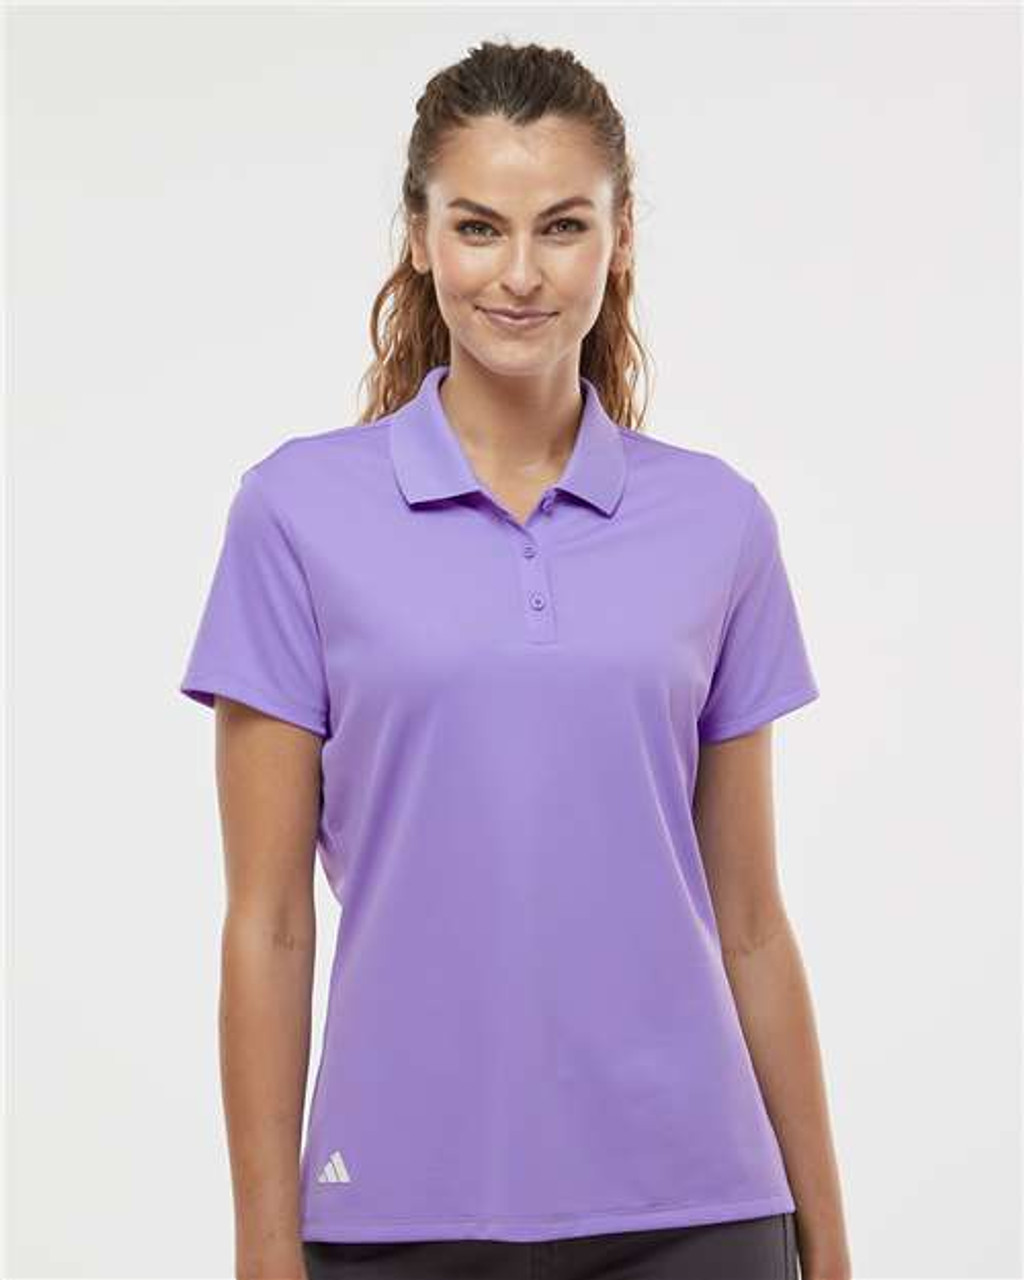 A431 Women's Basic Sport Polo Light Flash Purple